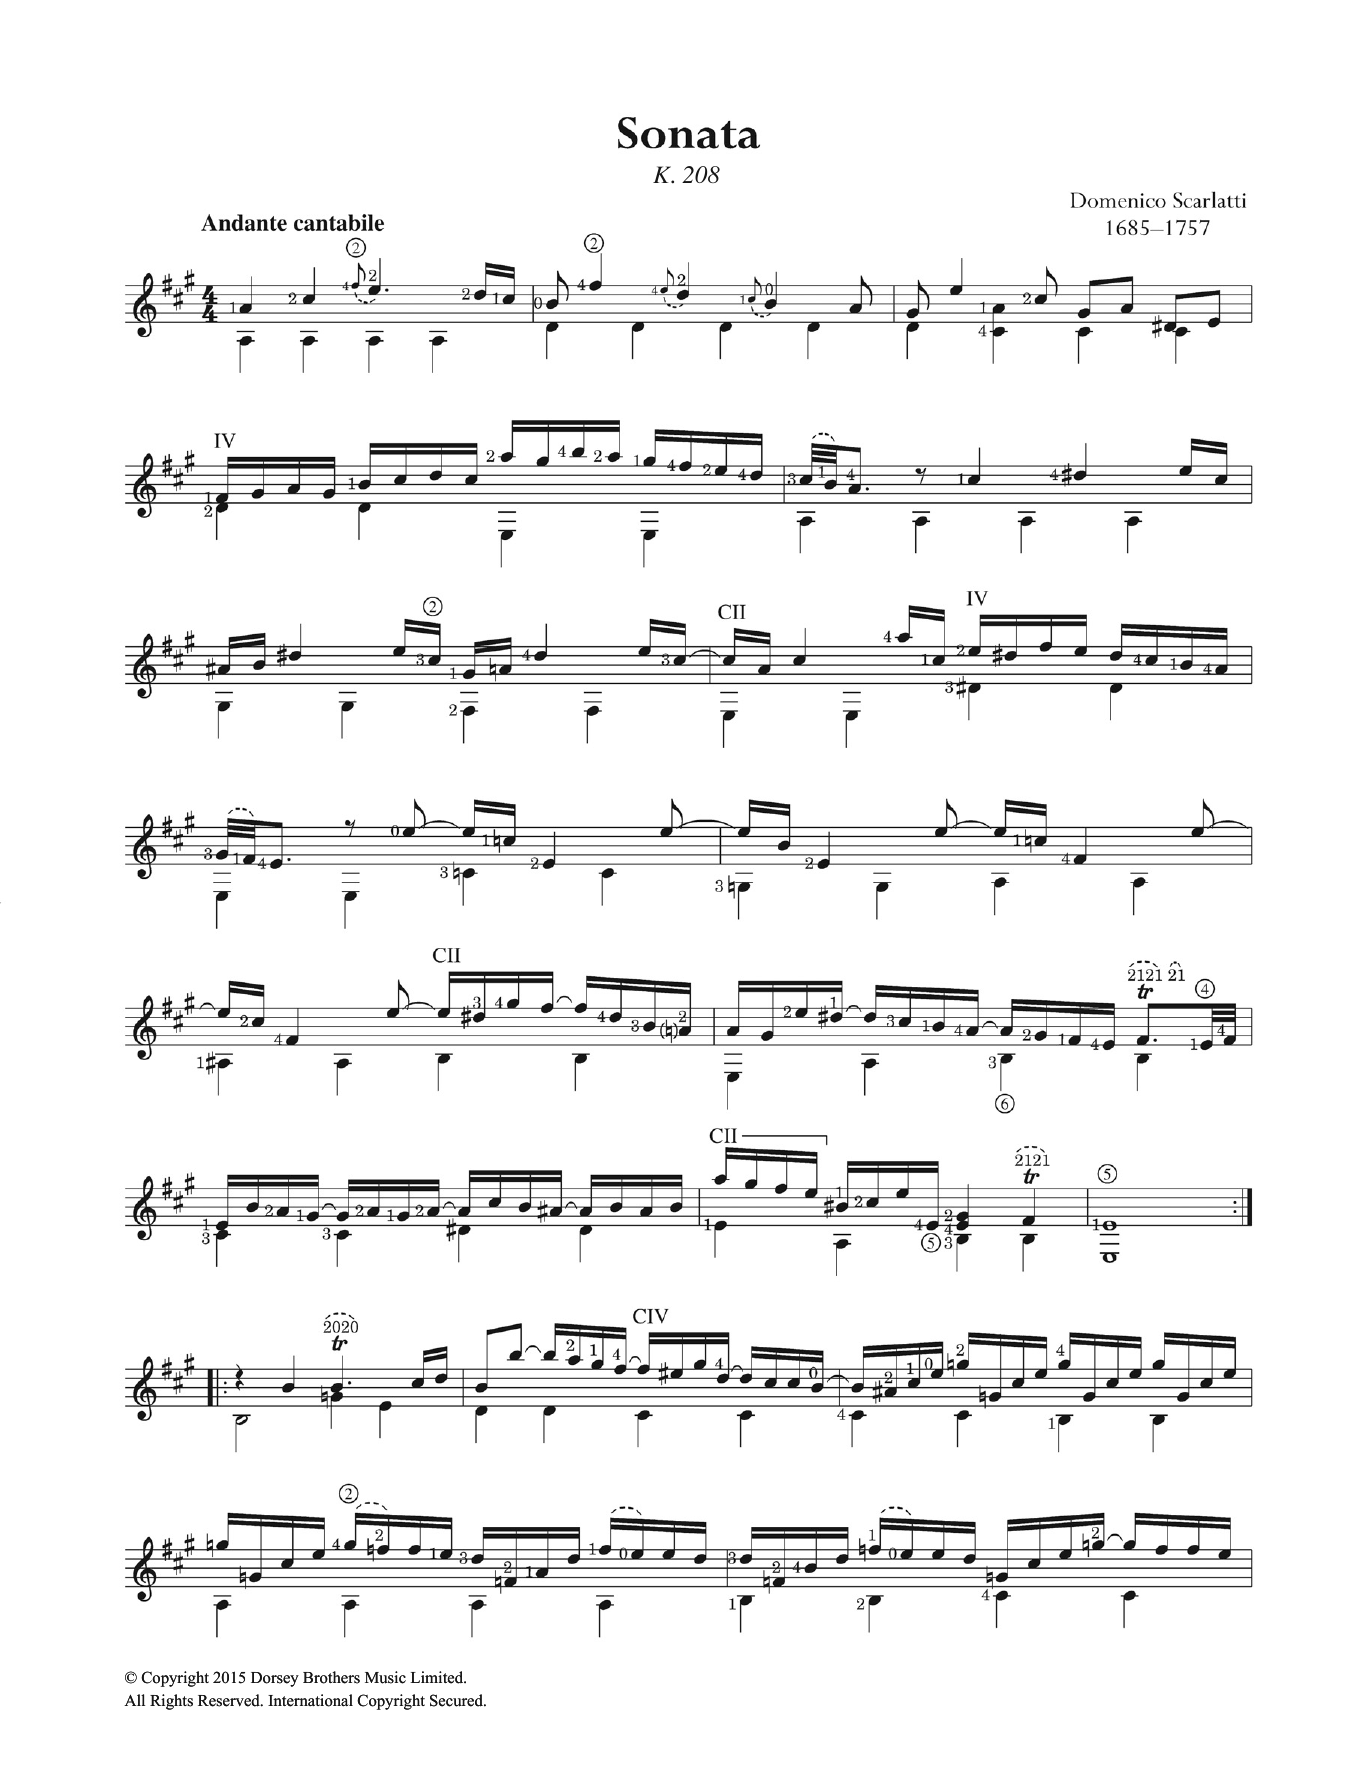 Domenico Scarlatti Sonata K.208 sheet music notes and chords arranged for Easy Guitar